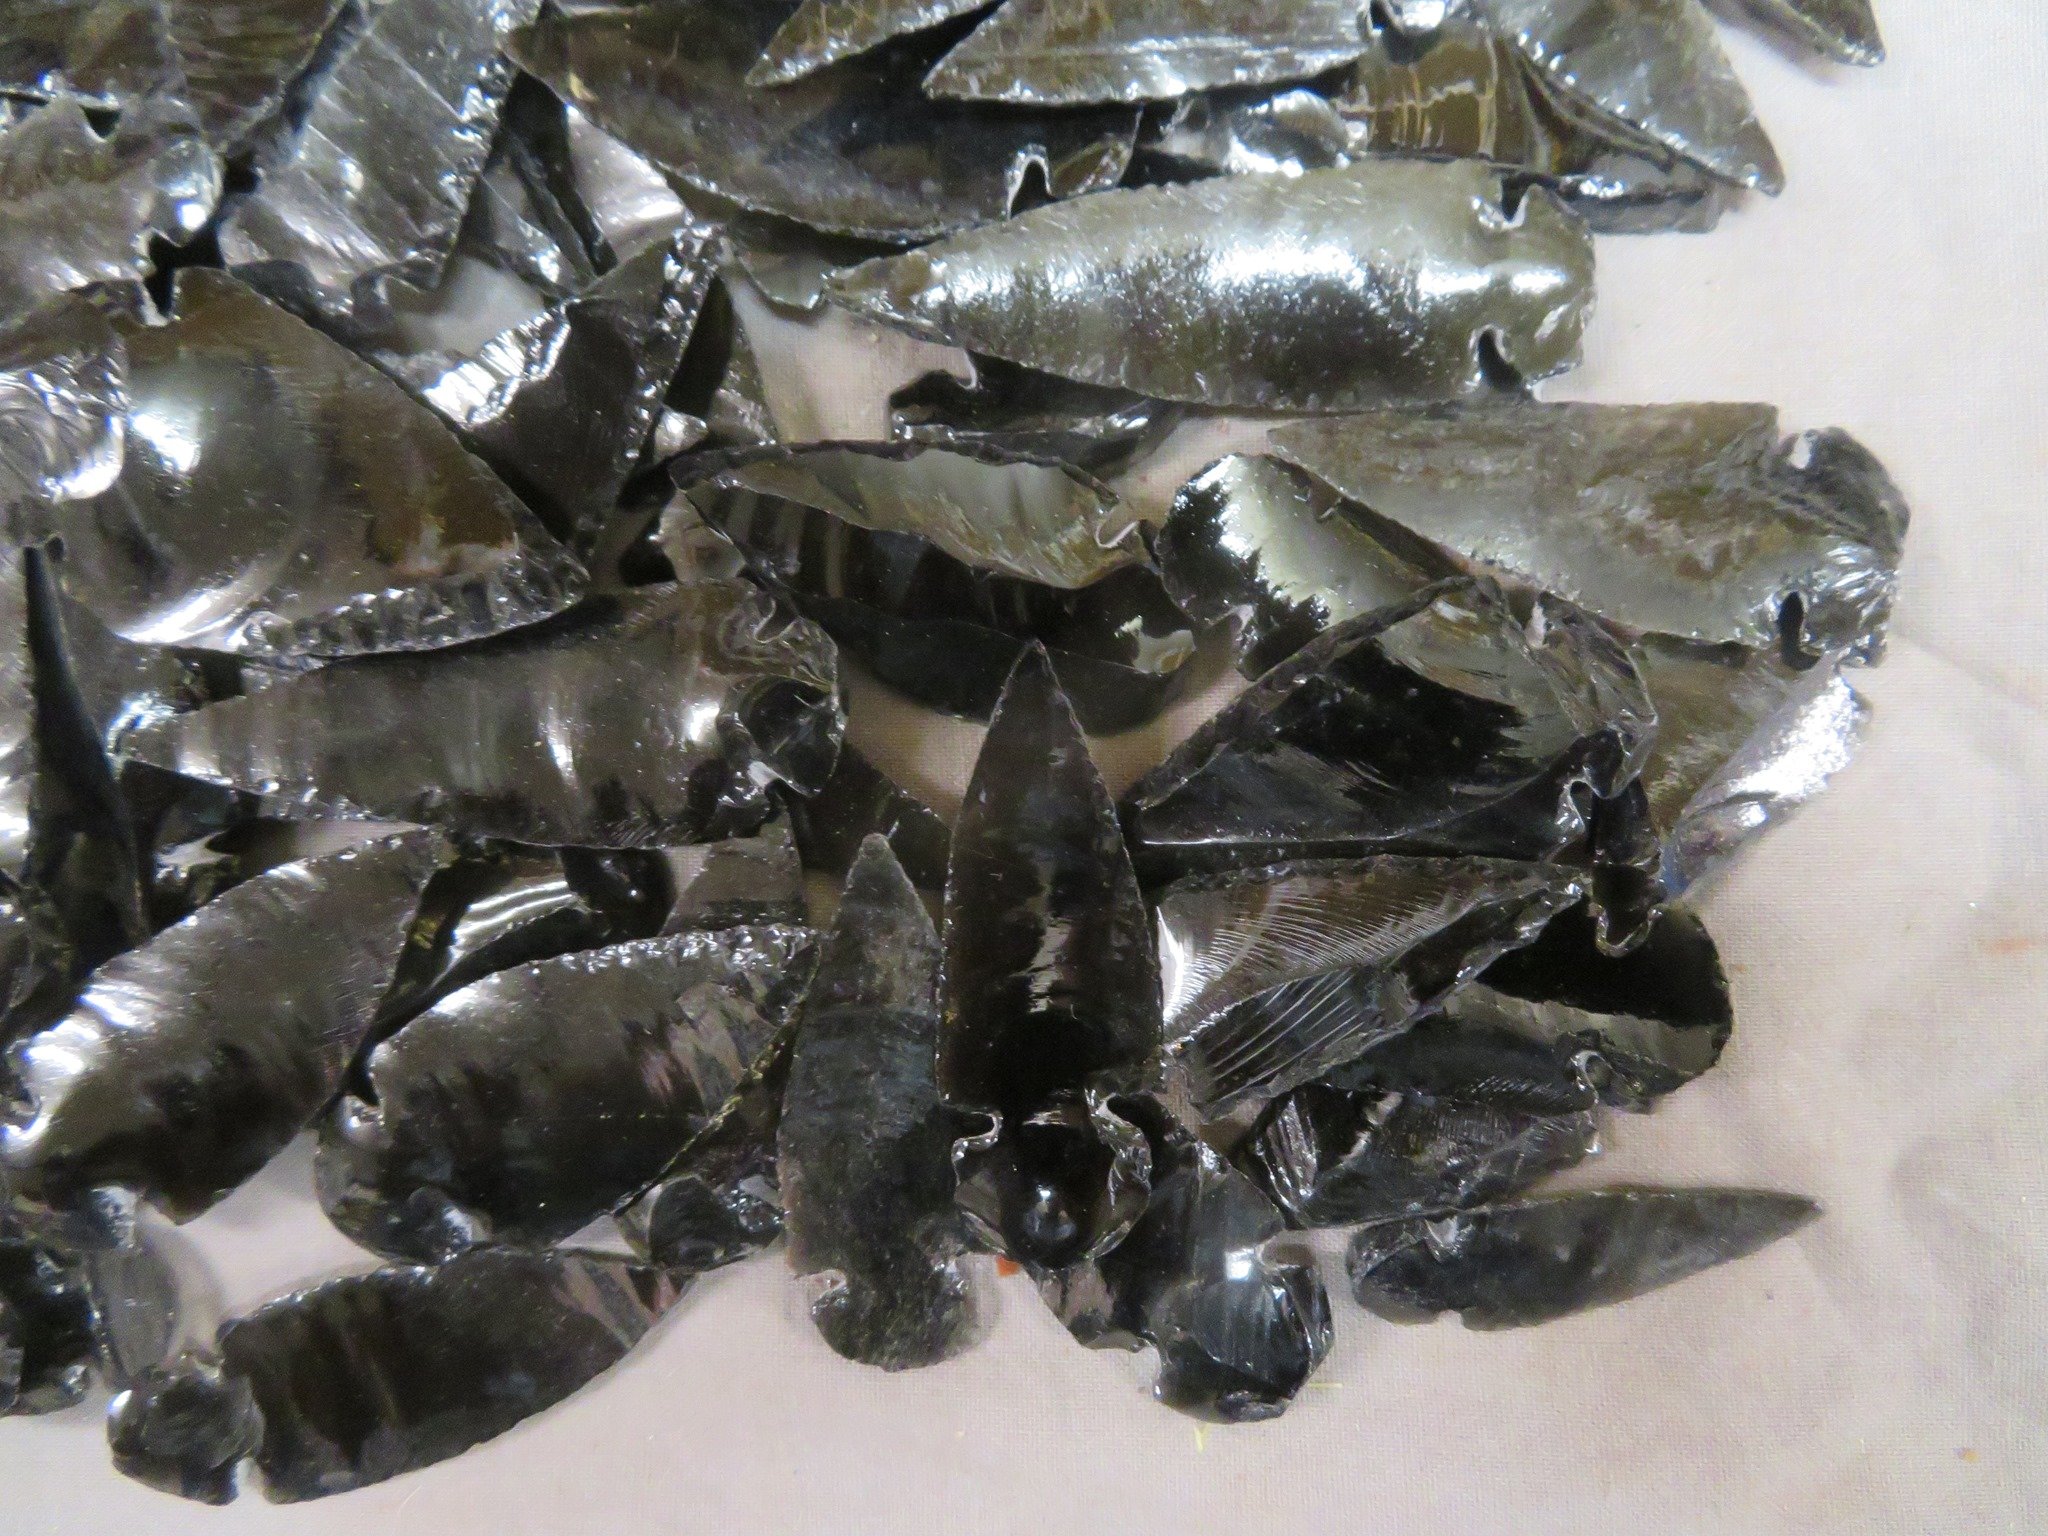 Black Obsidian Arrowheads-Sold in packs of 100